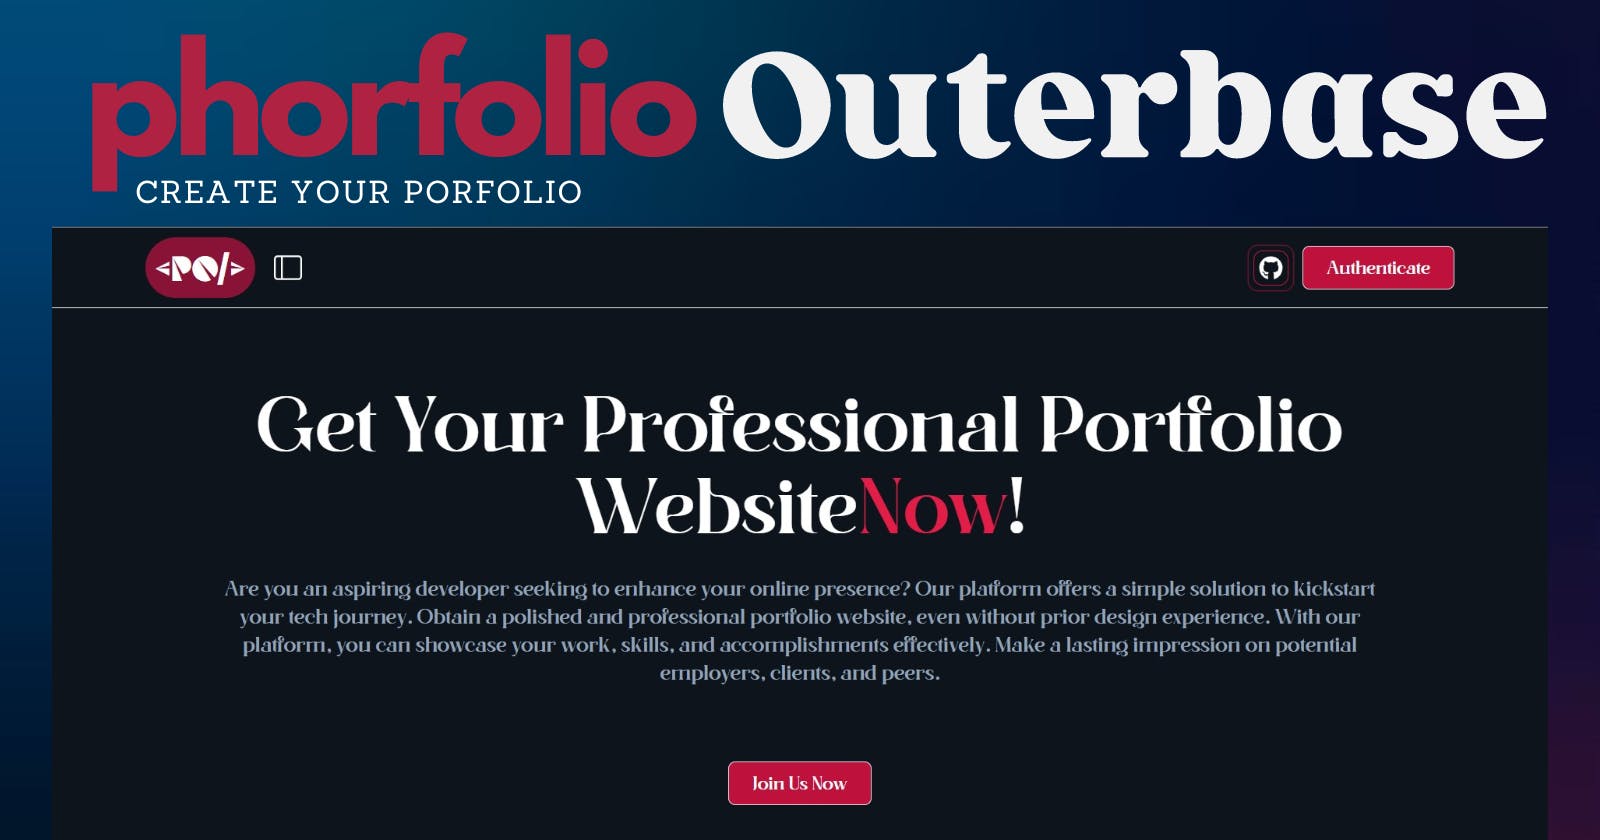 Phorfolio: Your Gateway to a Professional Developer Portfolio